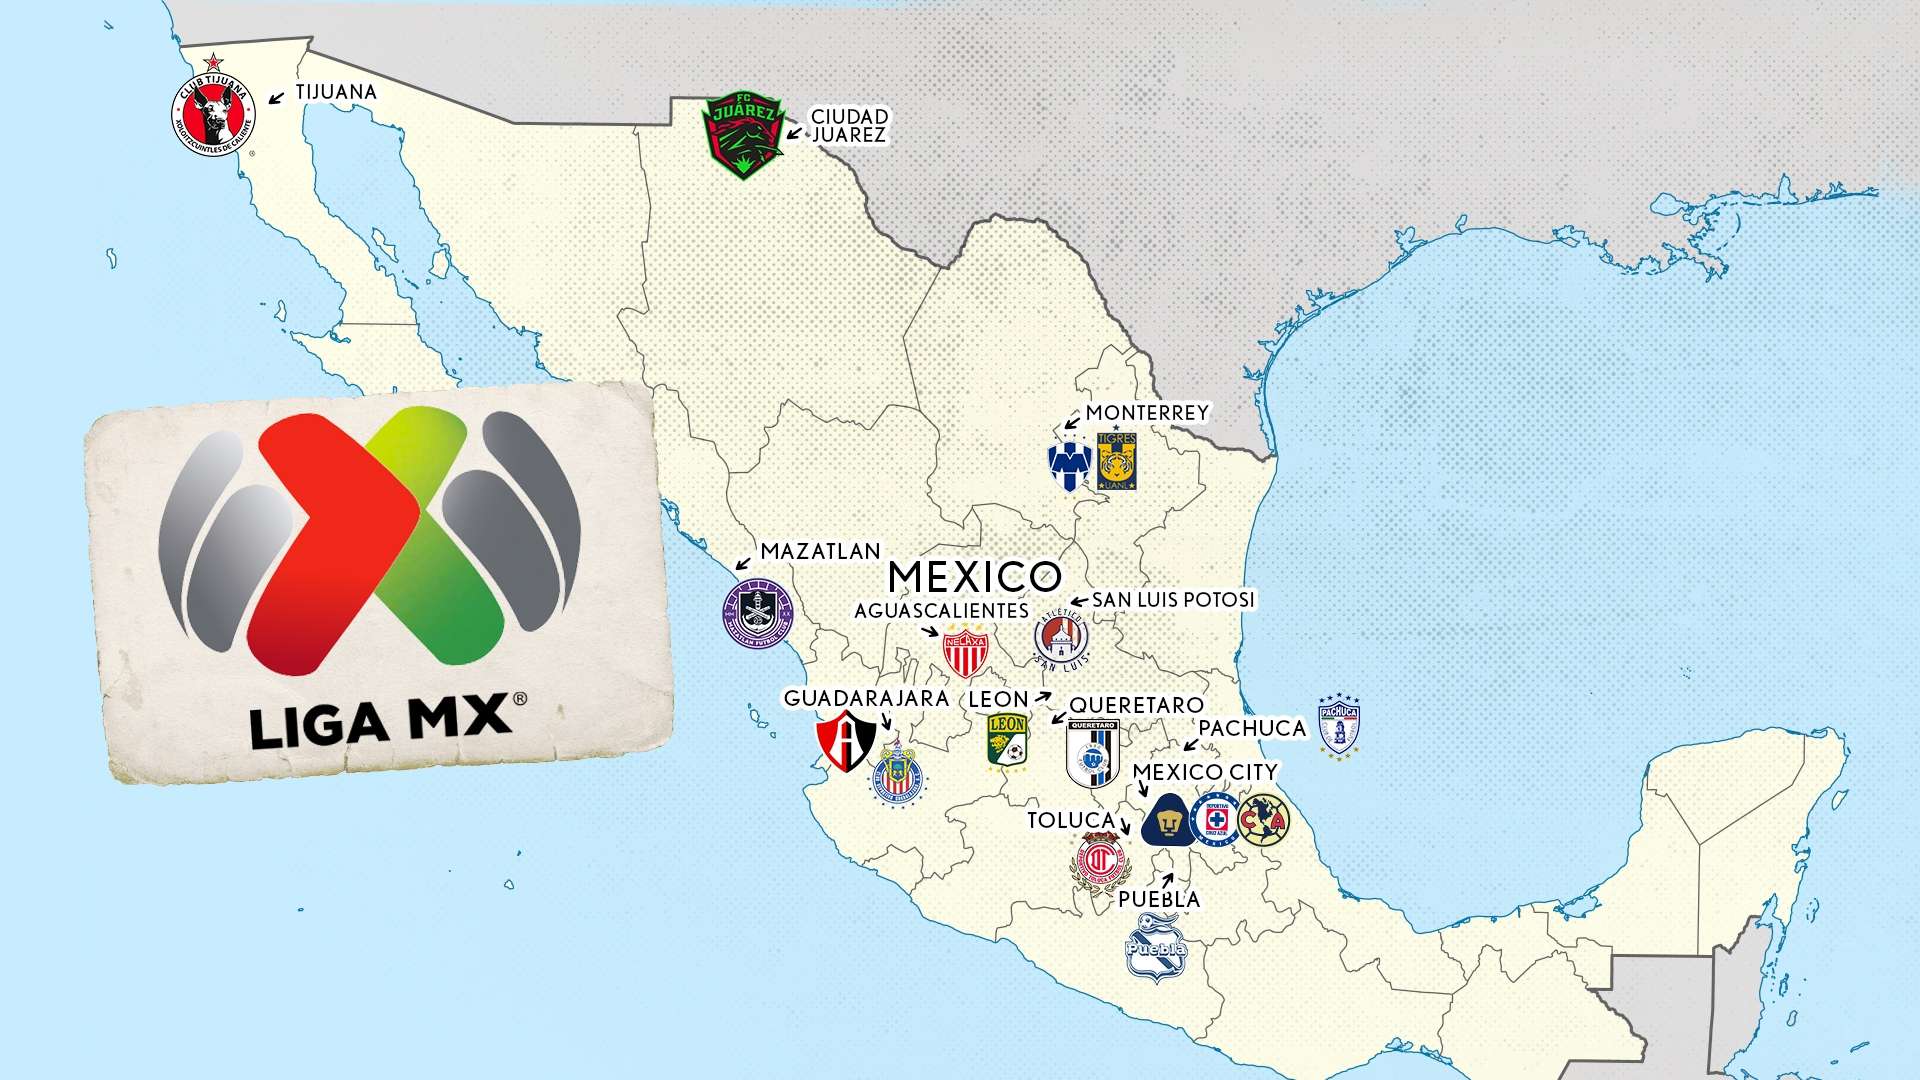 Liga MX Map locations